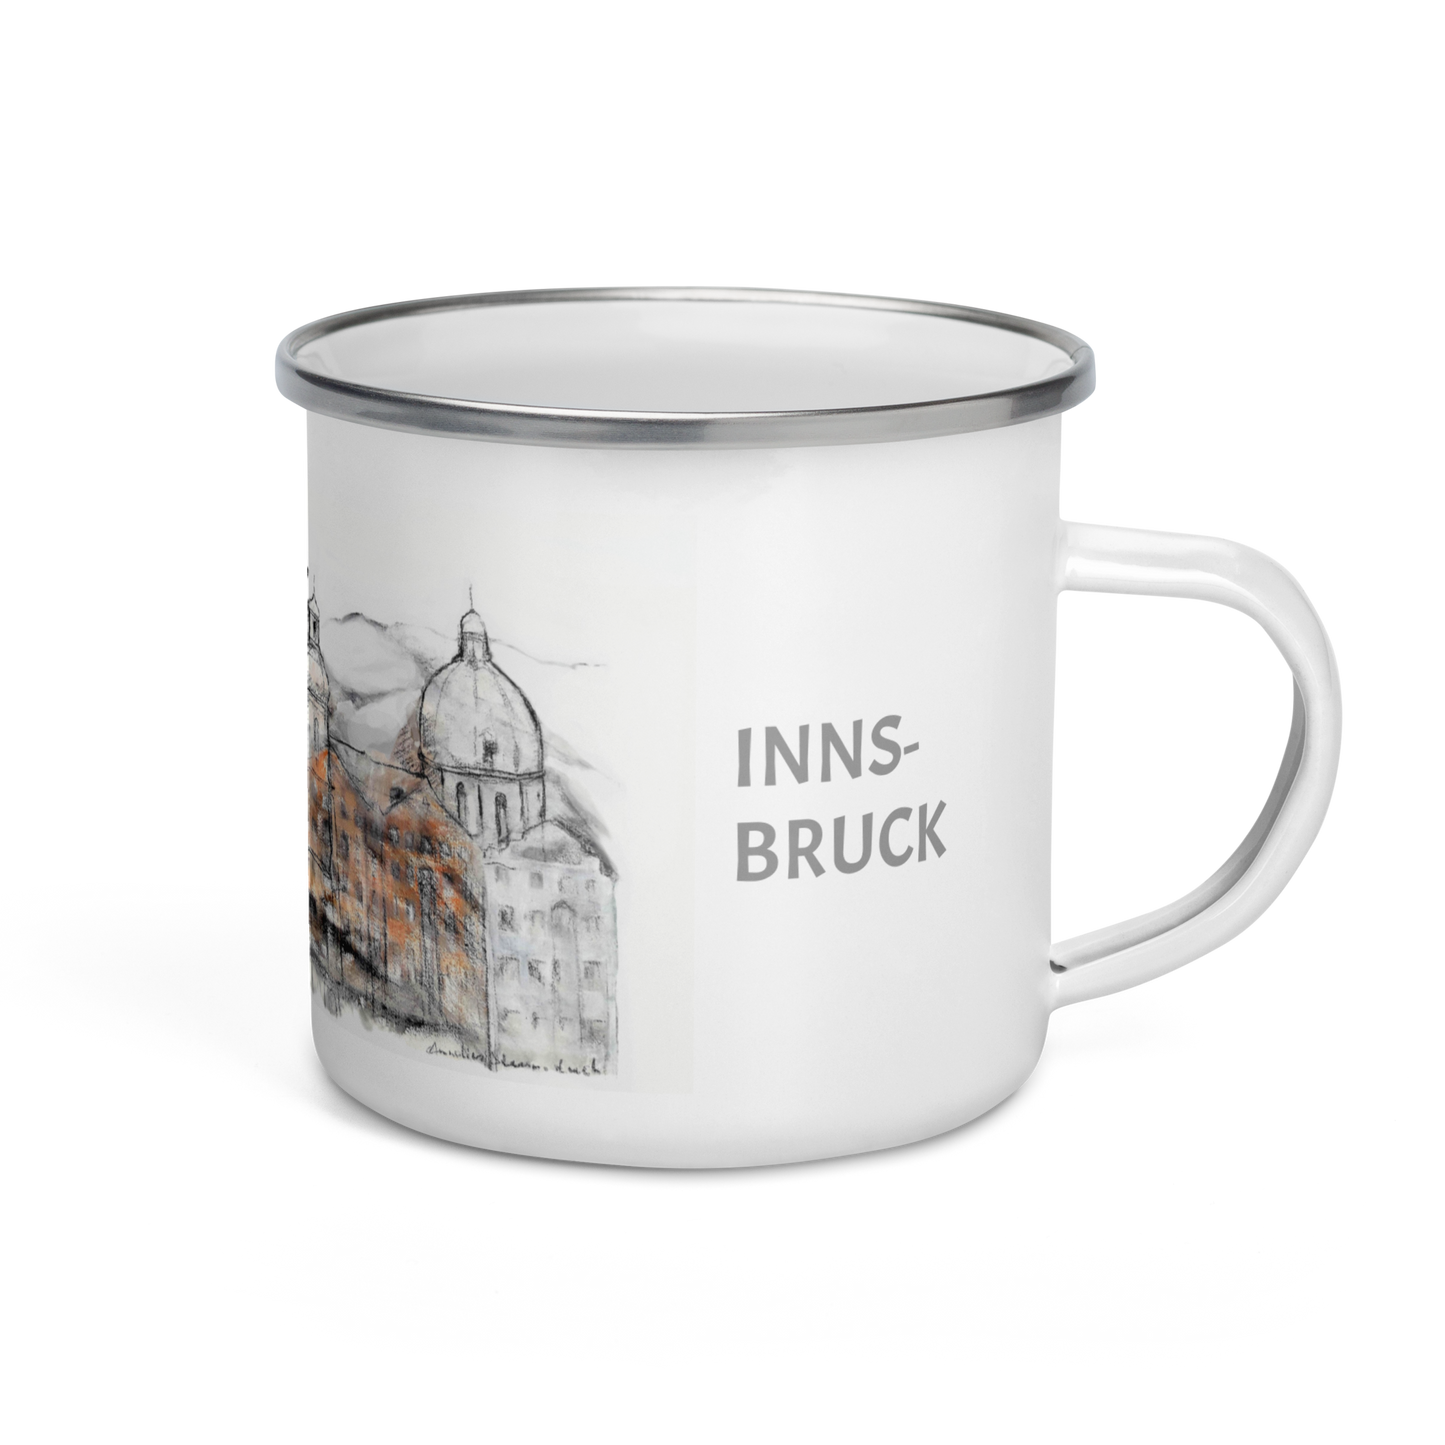 Mug enamel Innsbruck